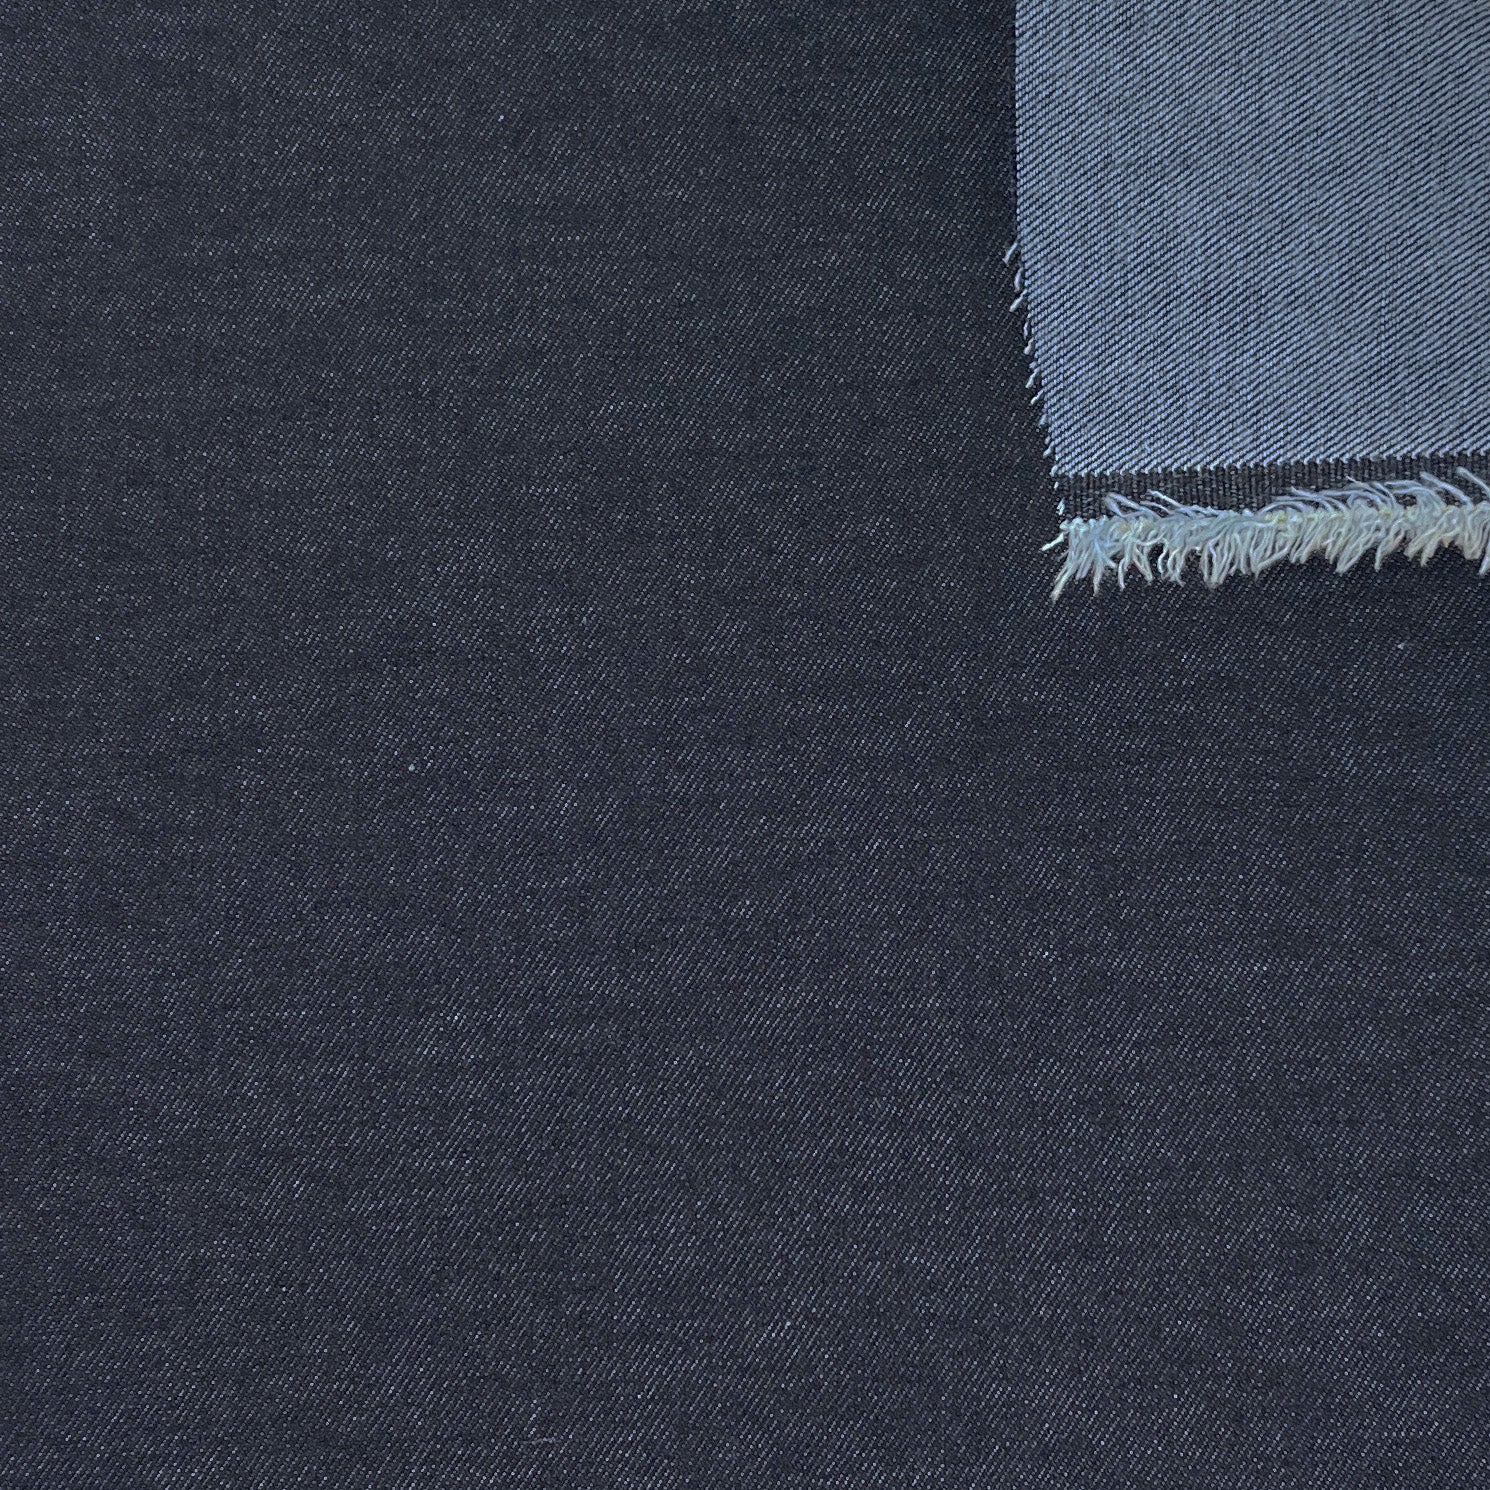 14.5oz 100%cotton material denim jeans fabric| Alibaba.com